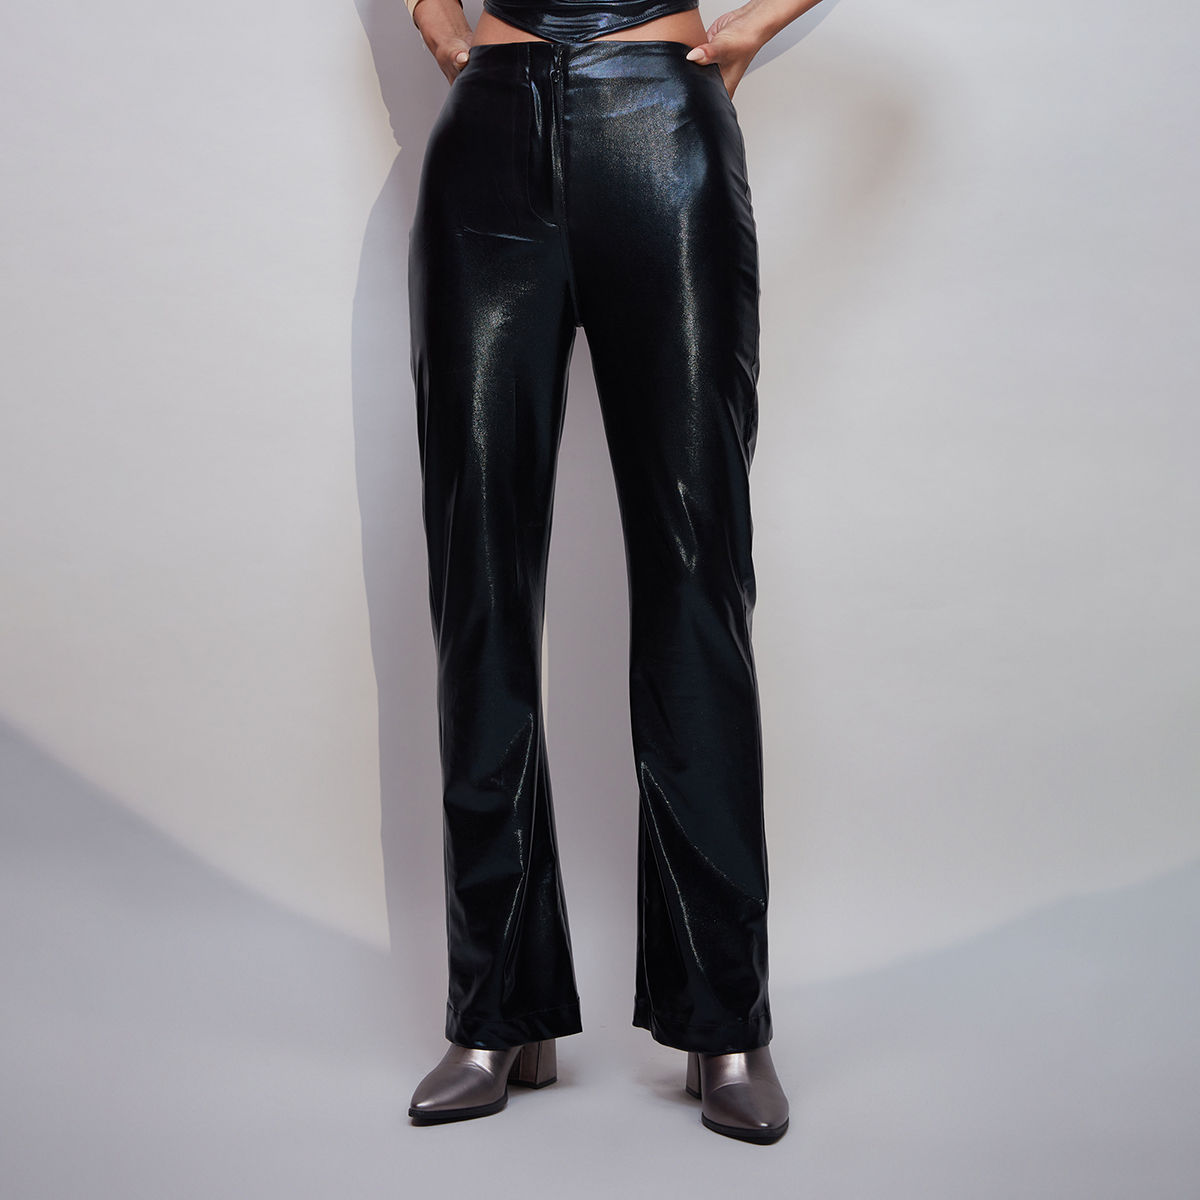 Buy Shasmi Womens Black High Waist Seam Detail Trousers Pant 69 Black S  at Amazonin